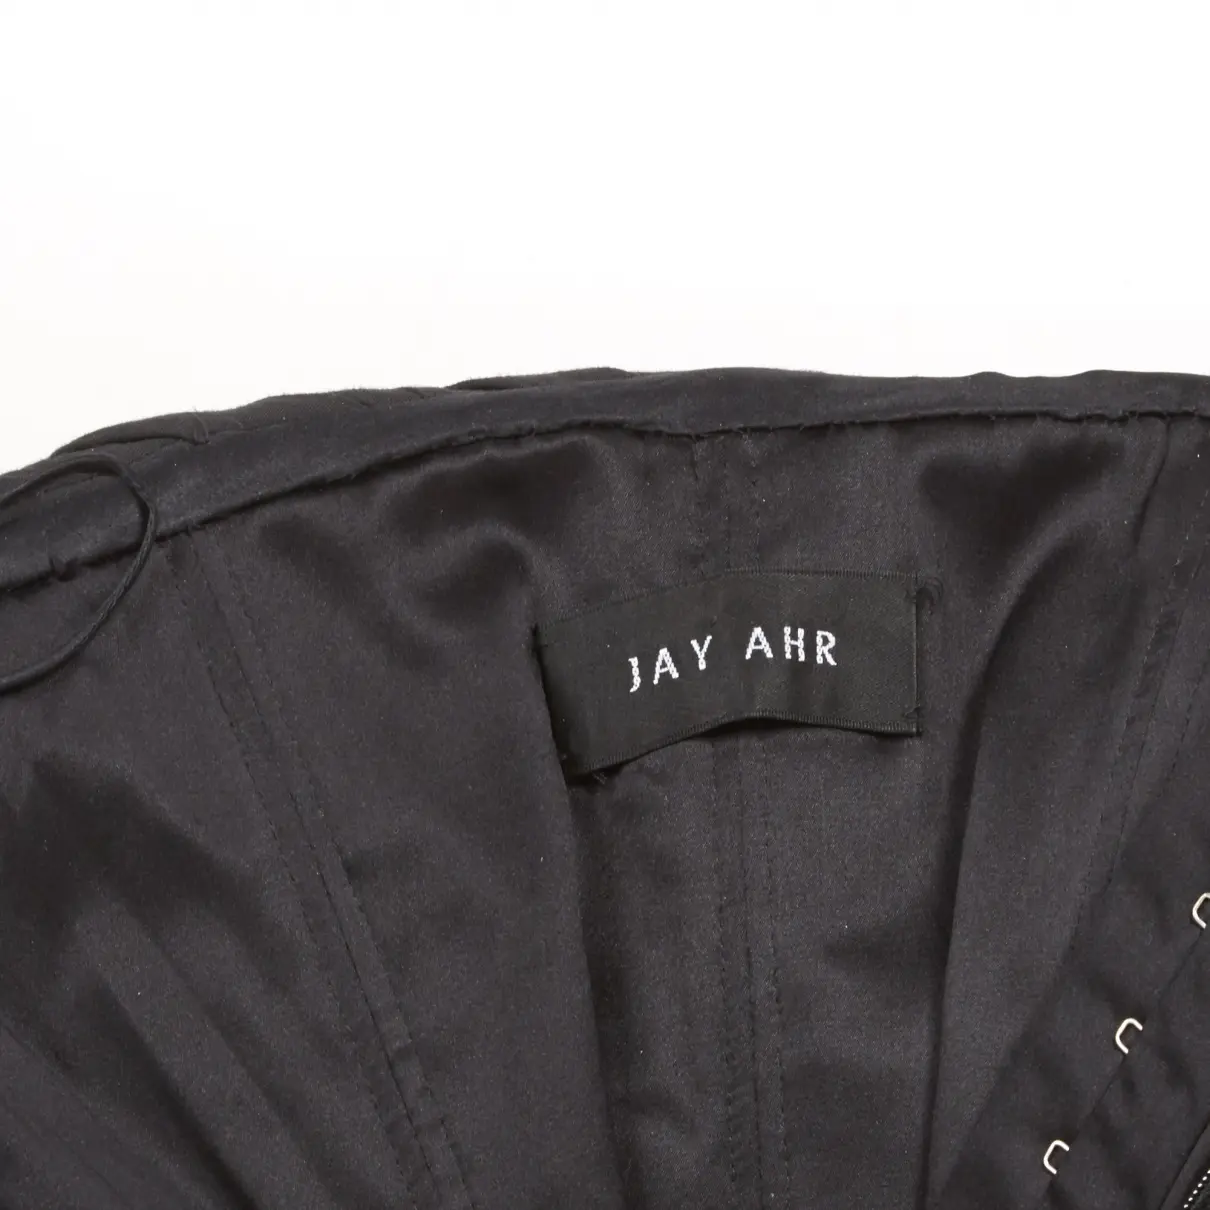 Buy Jay Ahr MINI DRESS online